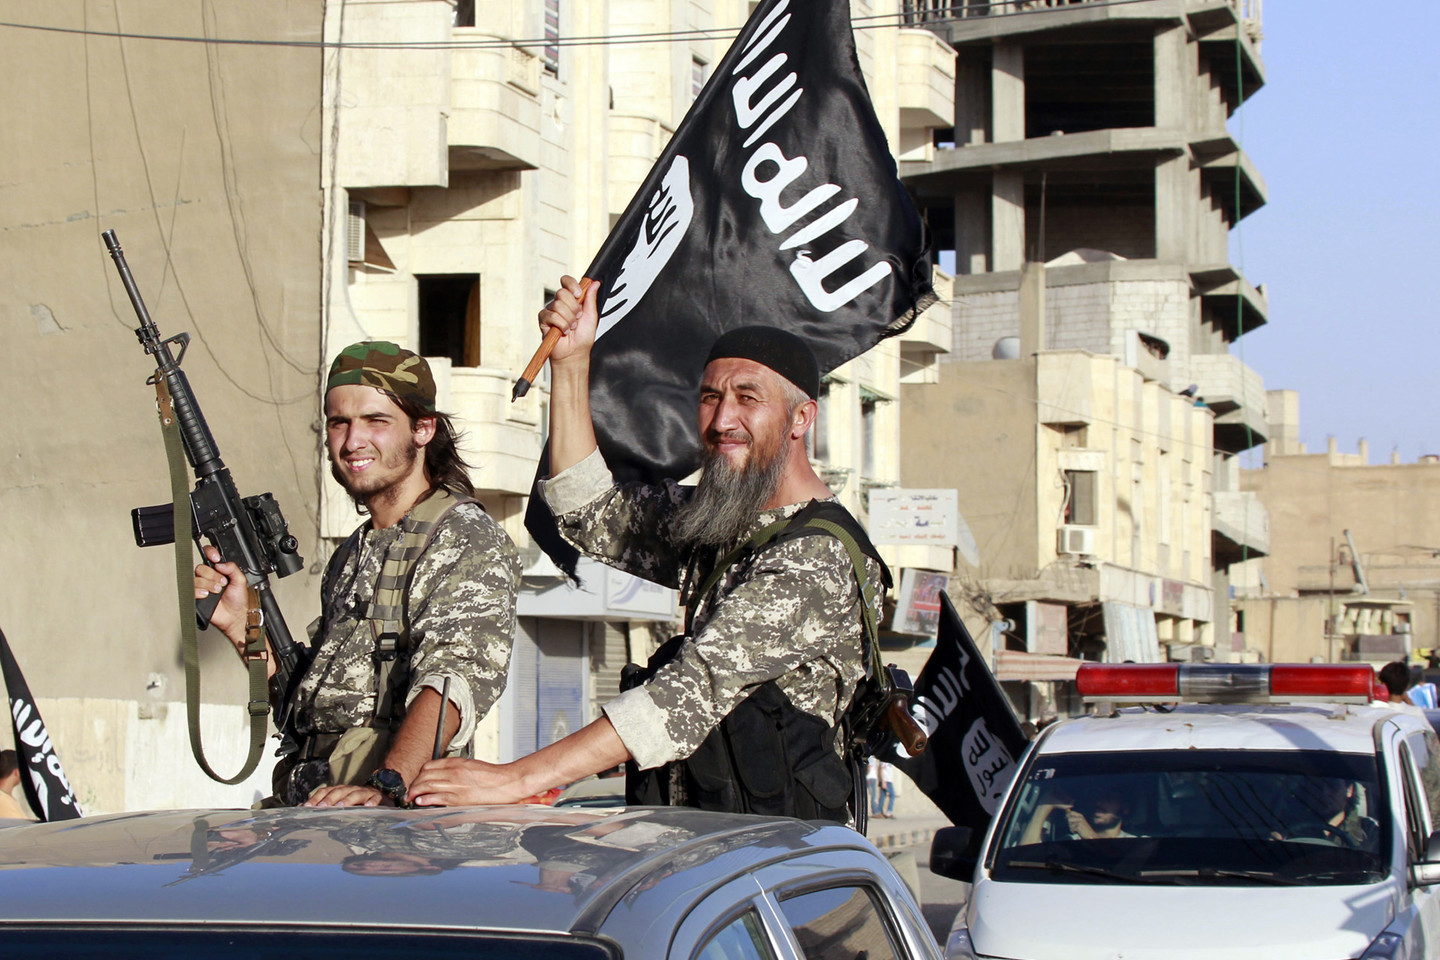  Džihadistų grupuotę IV palikę vaikai slapta bėga į Europą.<br> „Reuters“/„Scanpix“ nuotr.